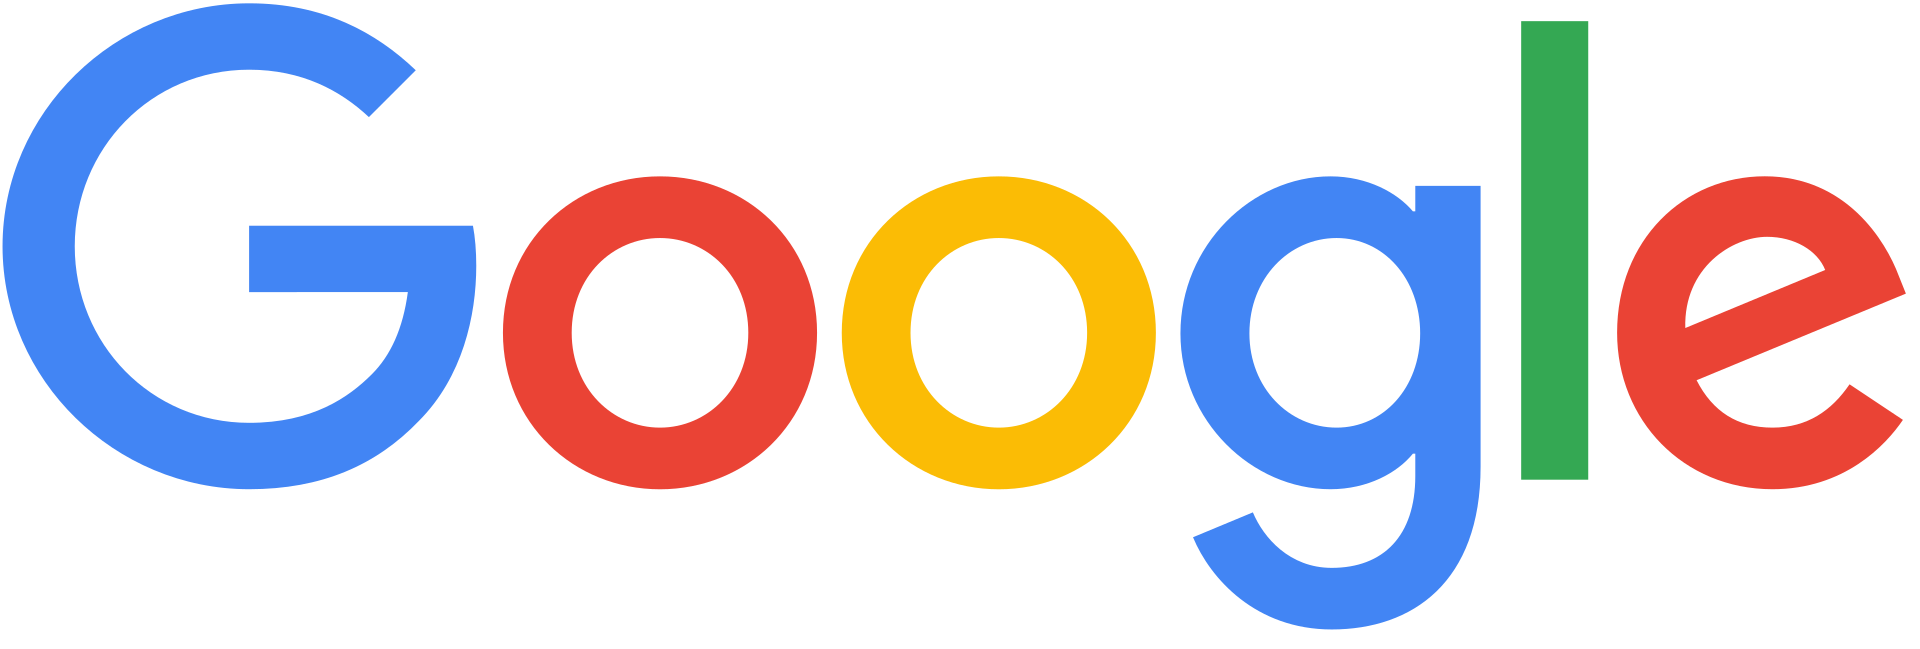 Google.ru